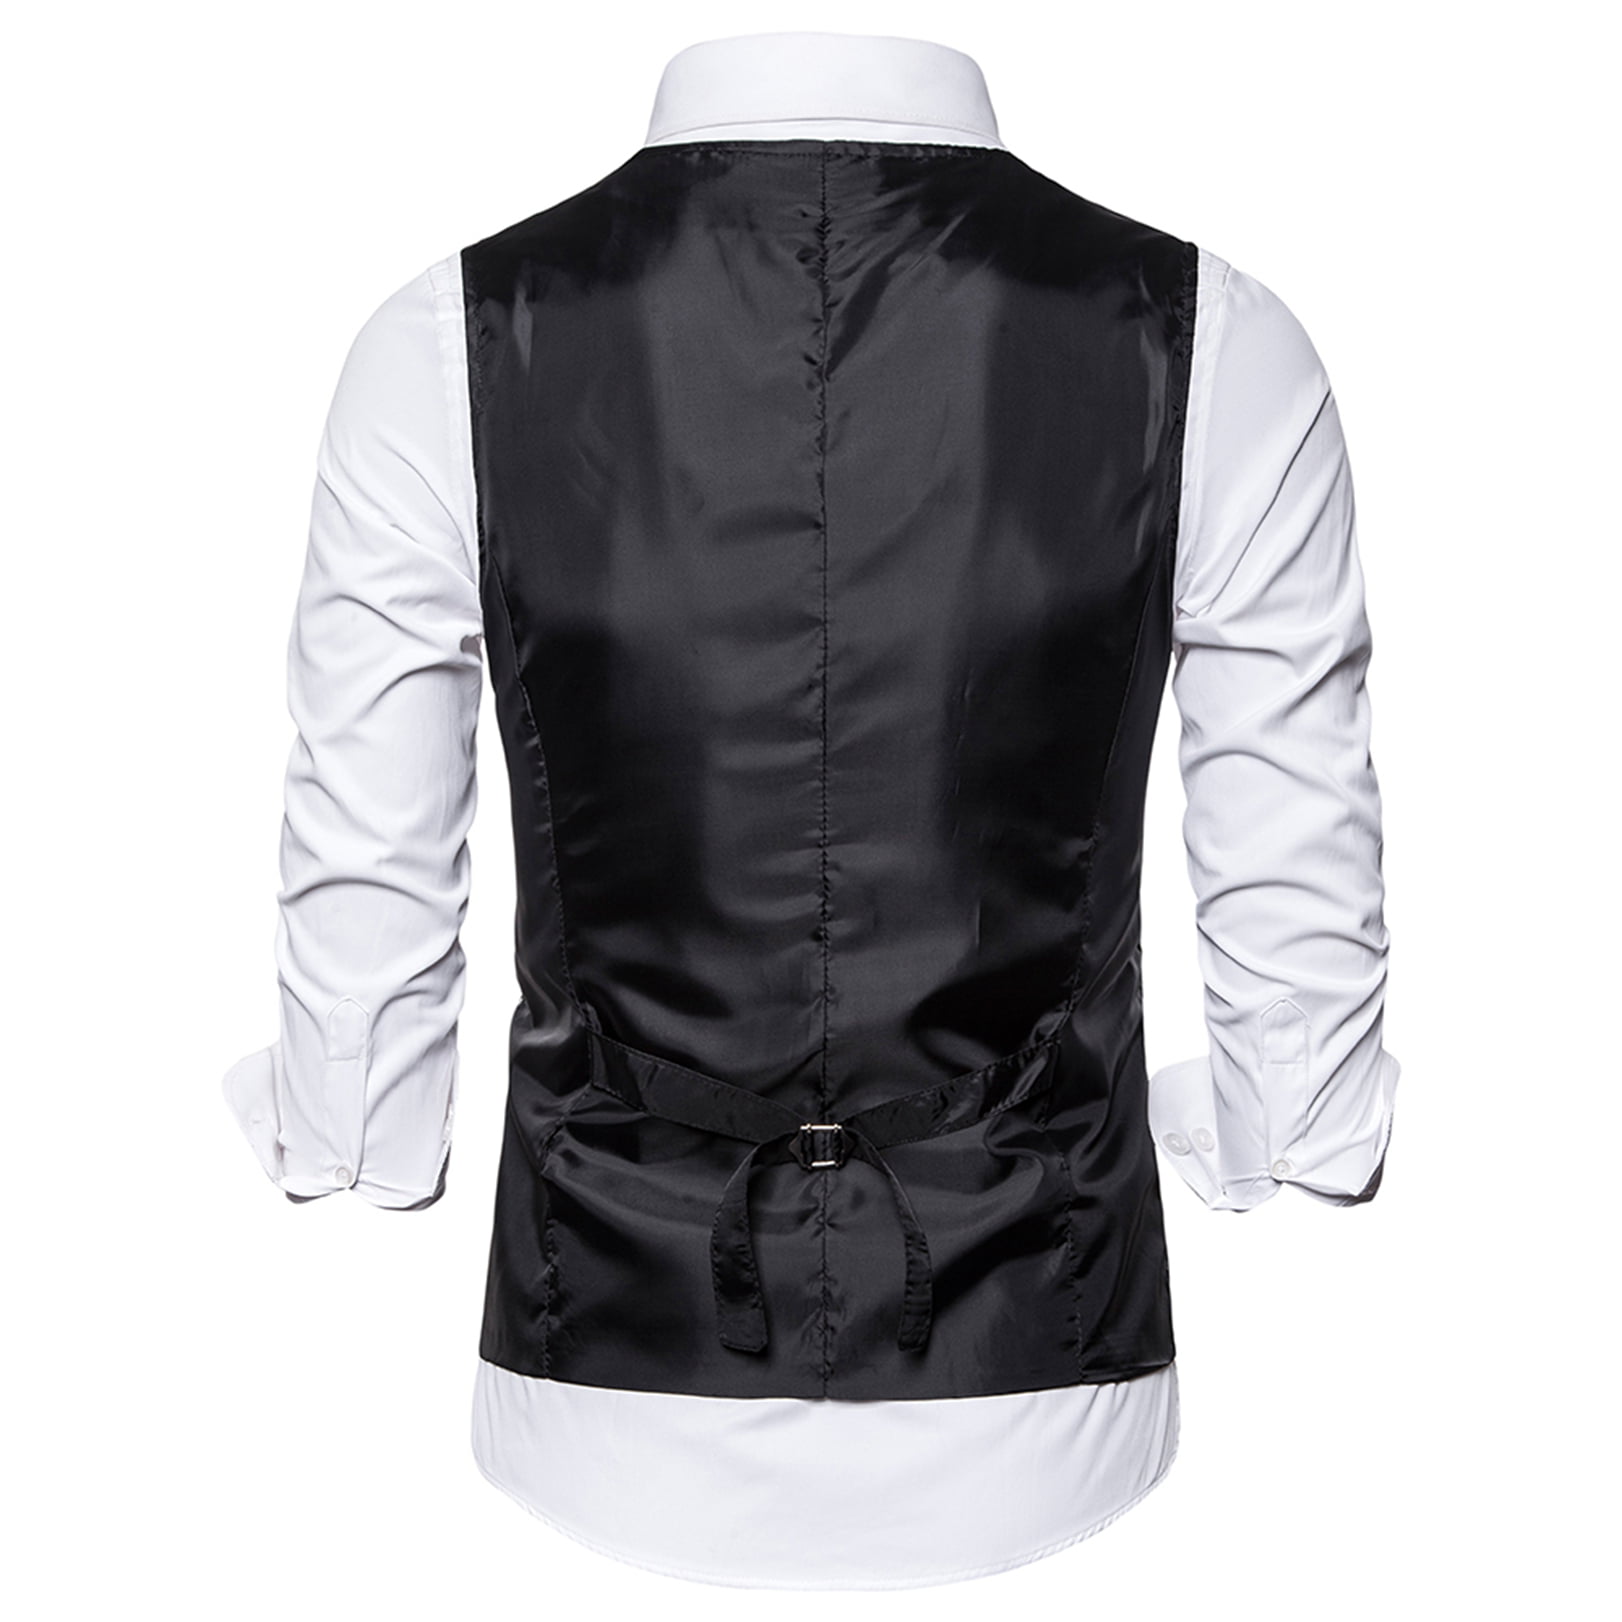 New Men's Formal Tuxedo Vest Waistcoat_2.5" skinny Necktie solid navy blue 